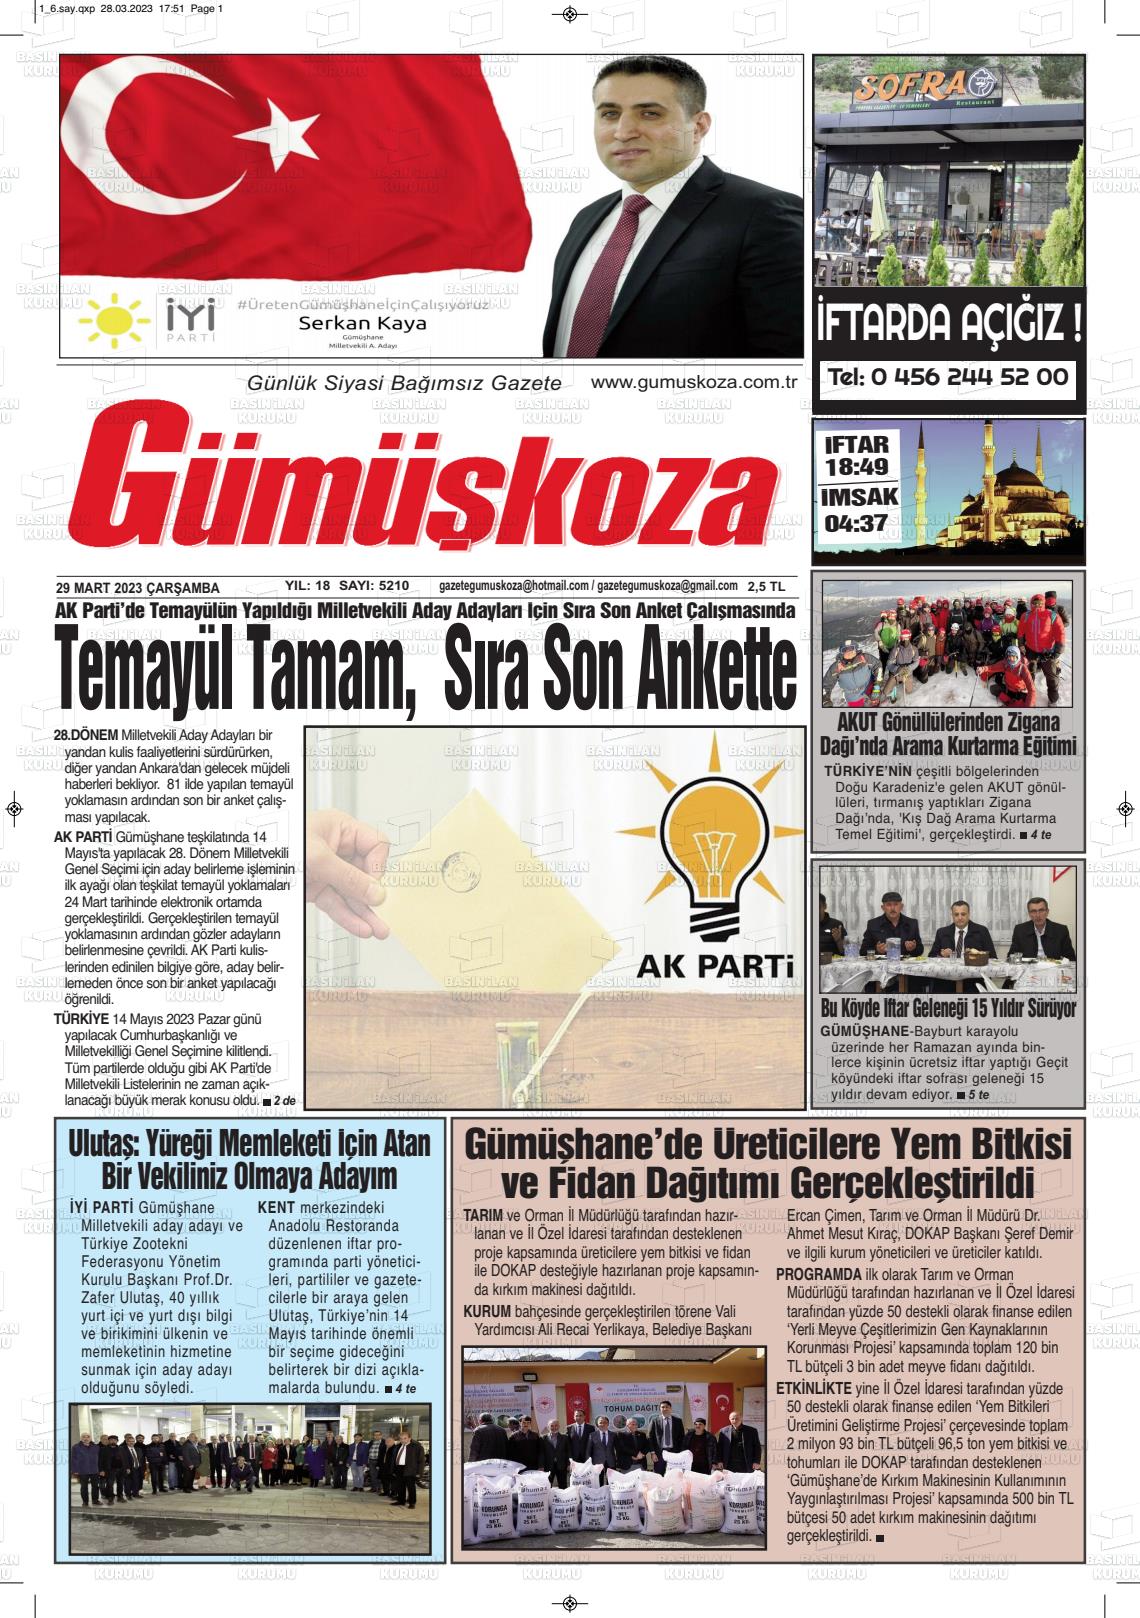 29 Mart 2023 Gümüşkoza Gazete Manşeti